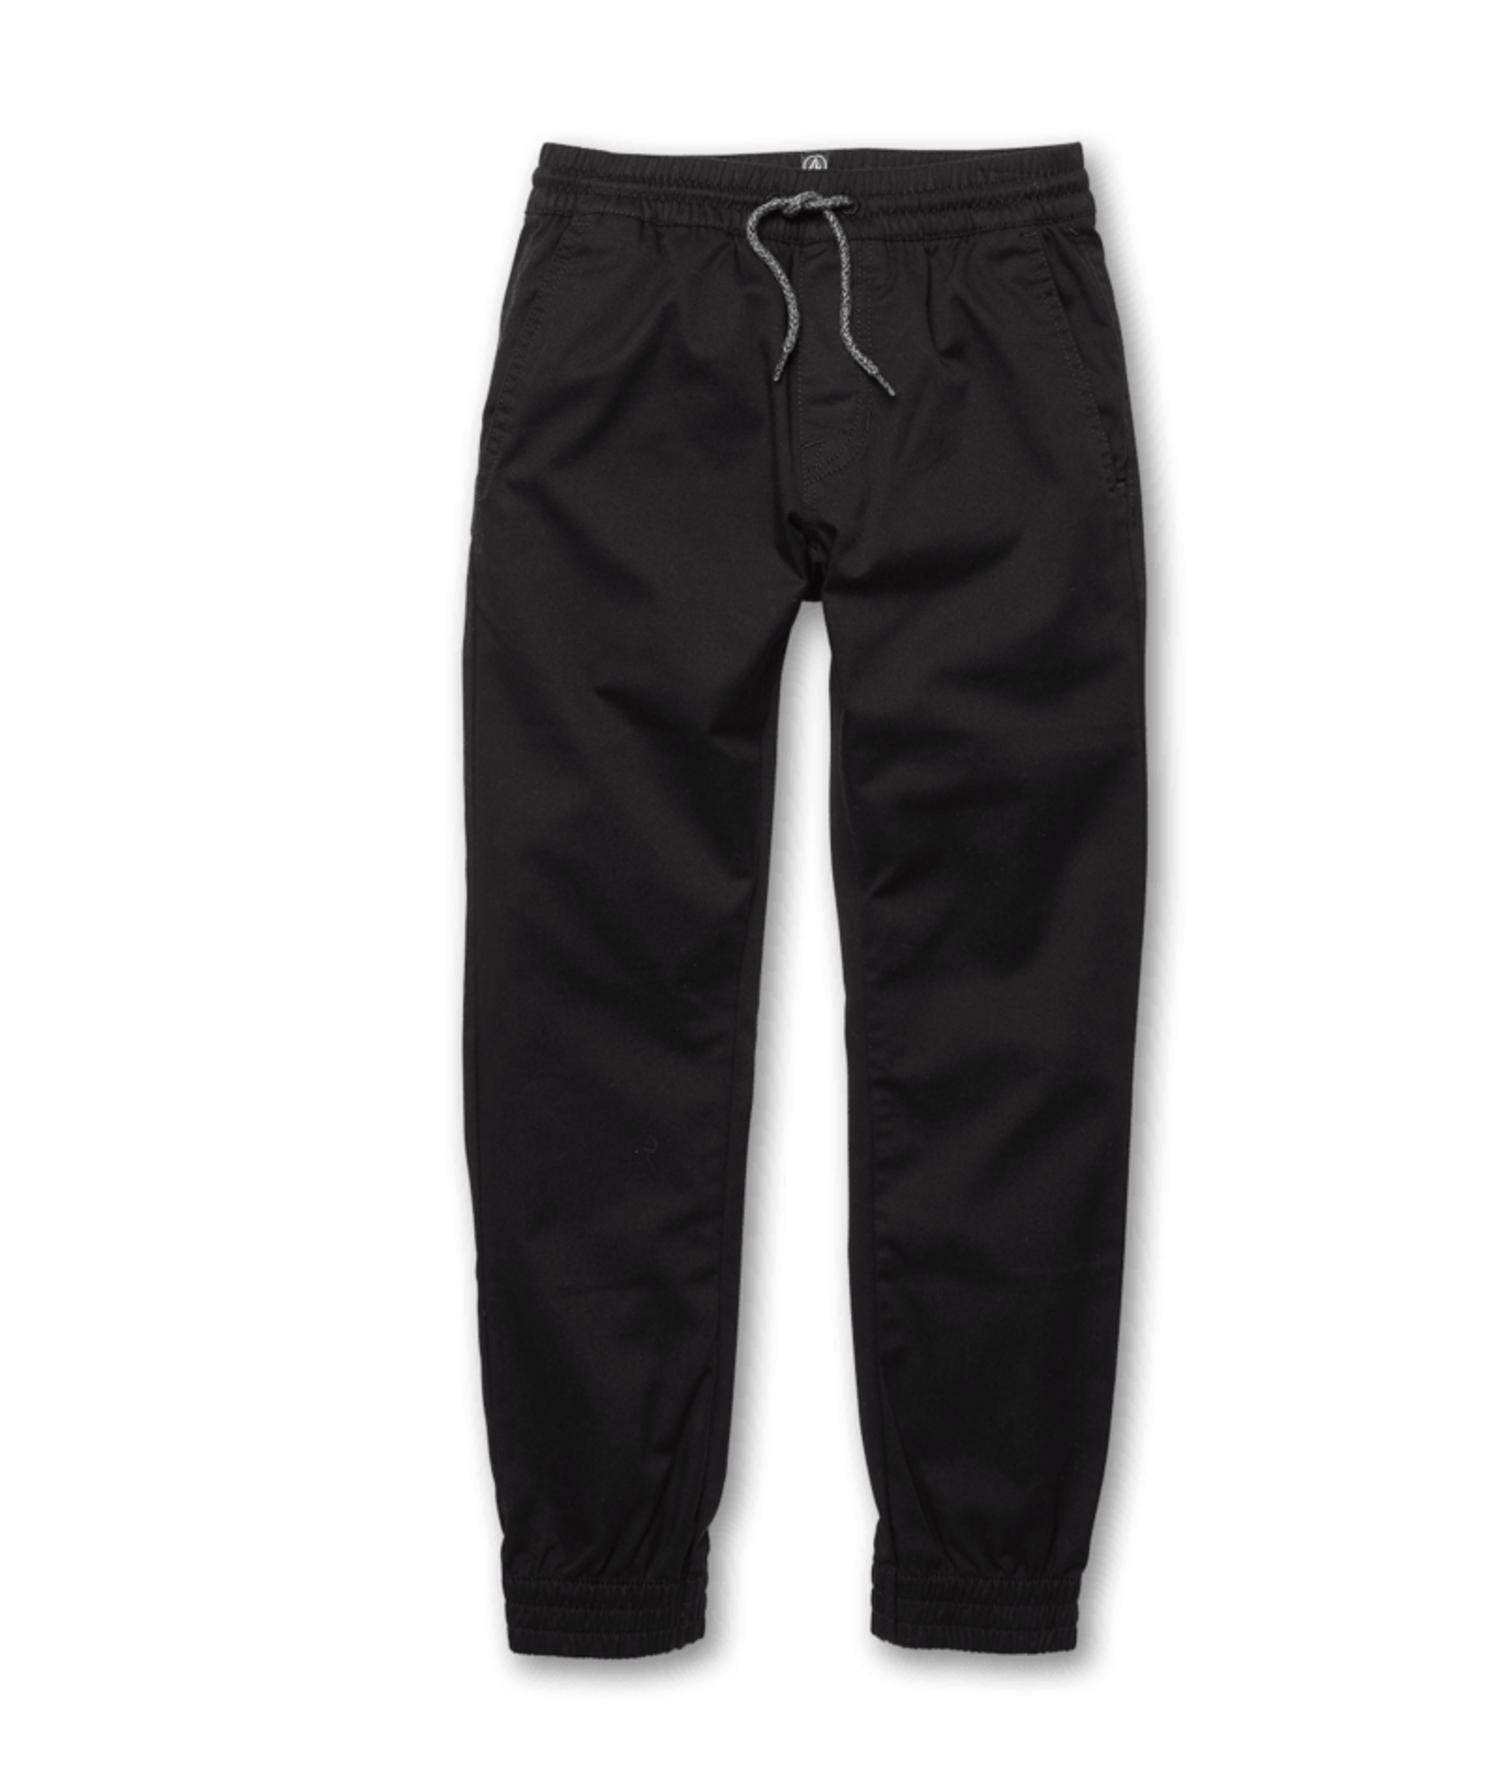 Black jogger pants